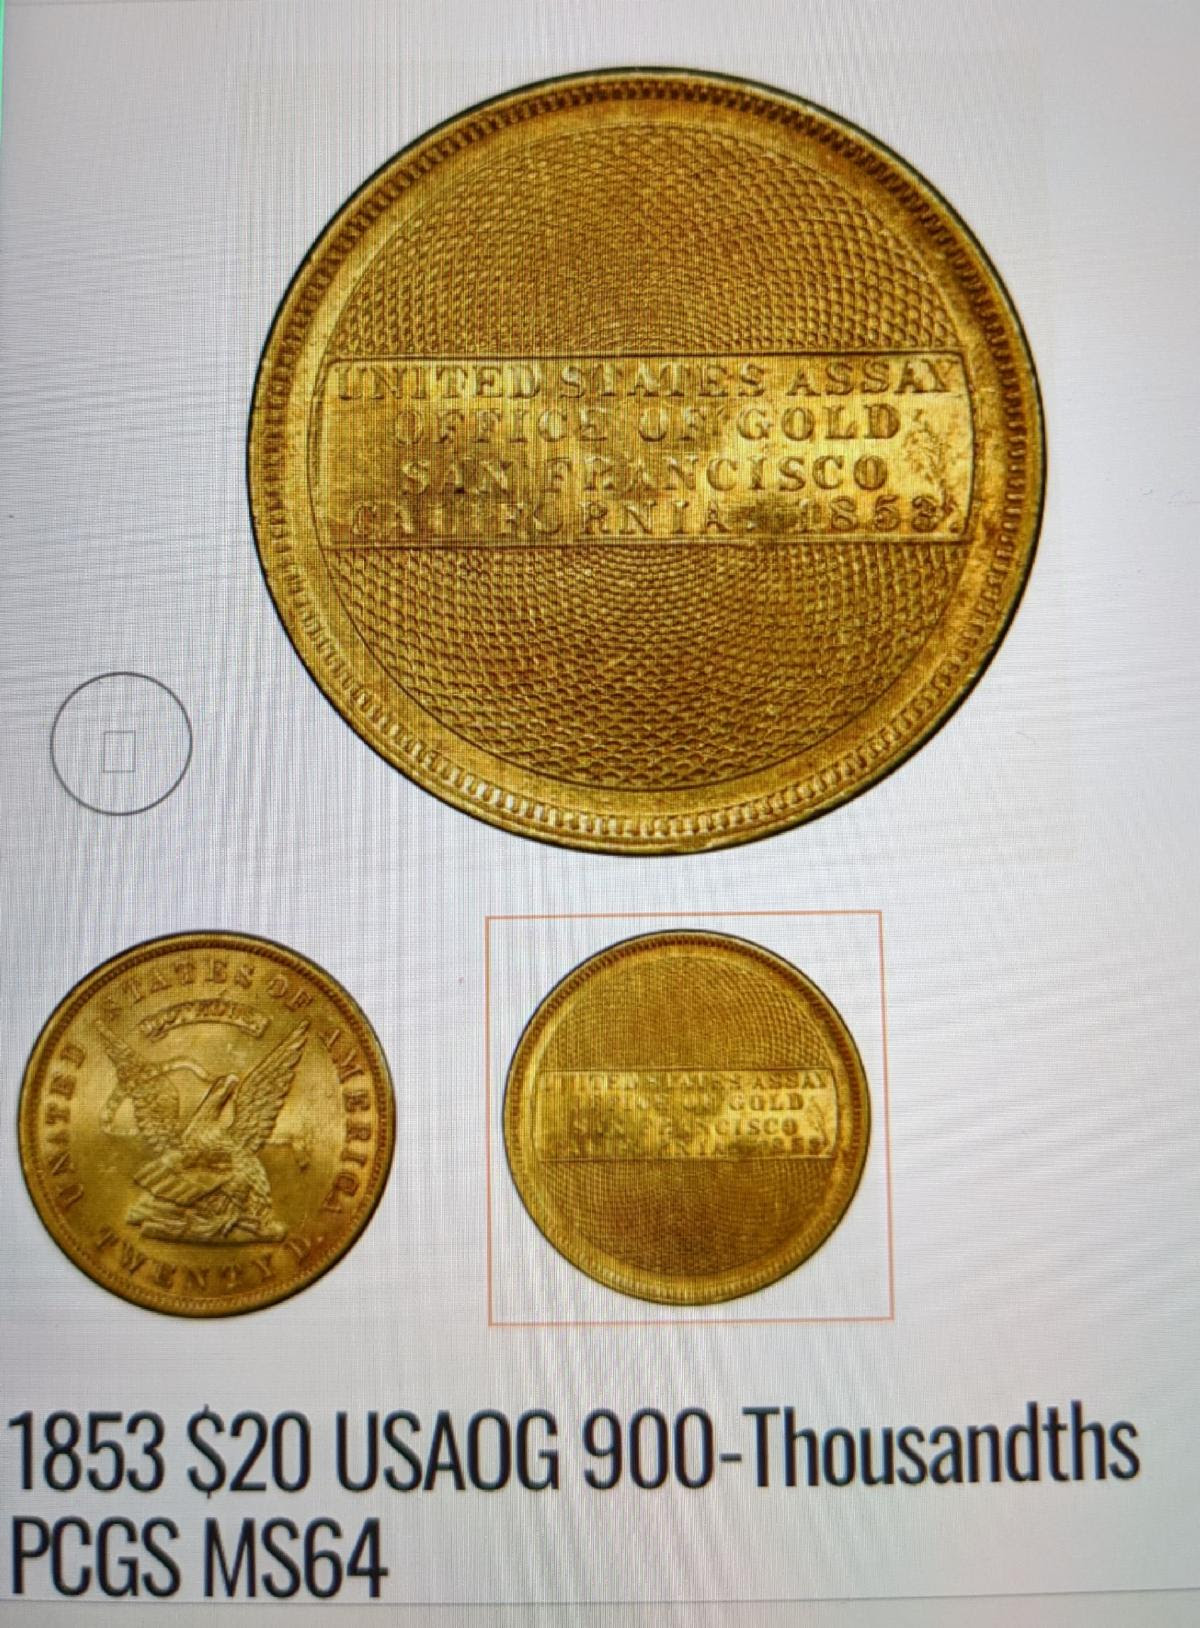 1853 $20 USAOG 900-Thousandths PCGS MS64 107684435. Image courtesy Numismatic Crime Information Center (NCIC), Doug Davis